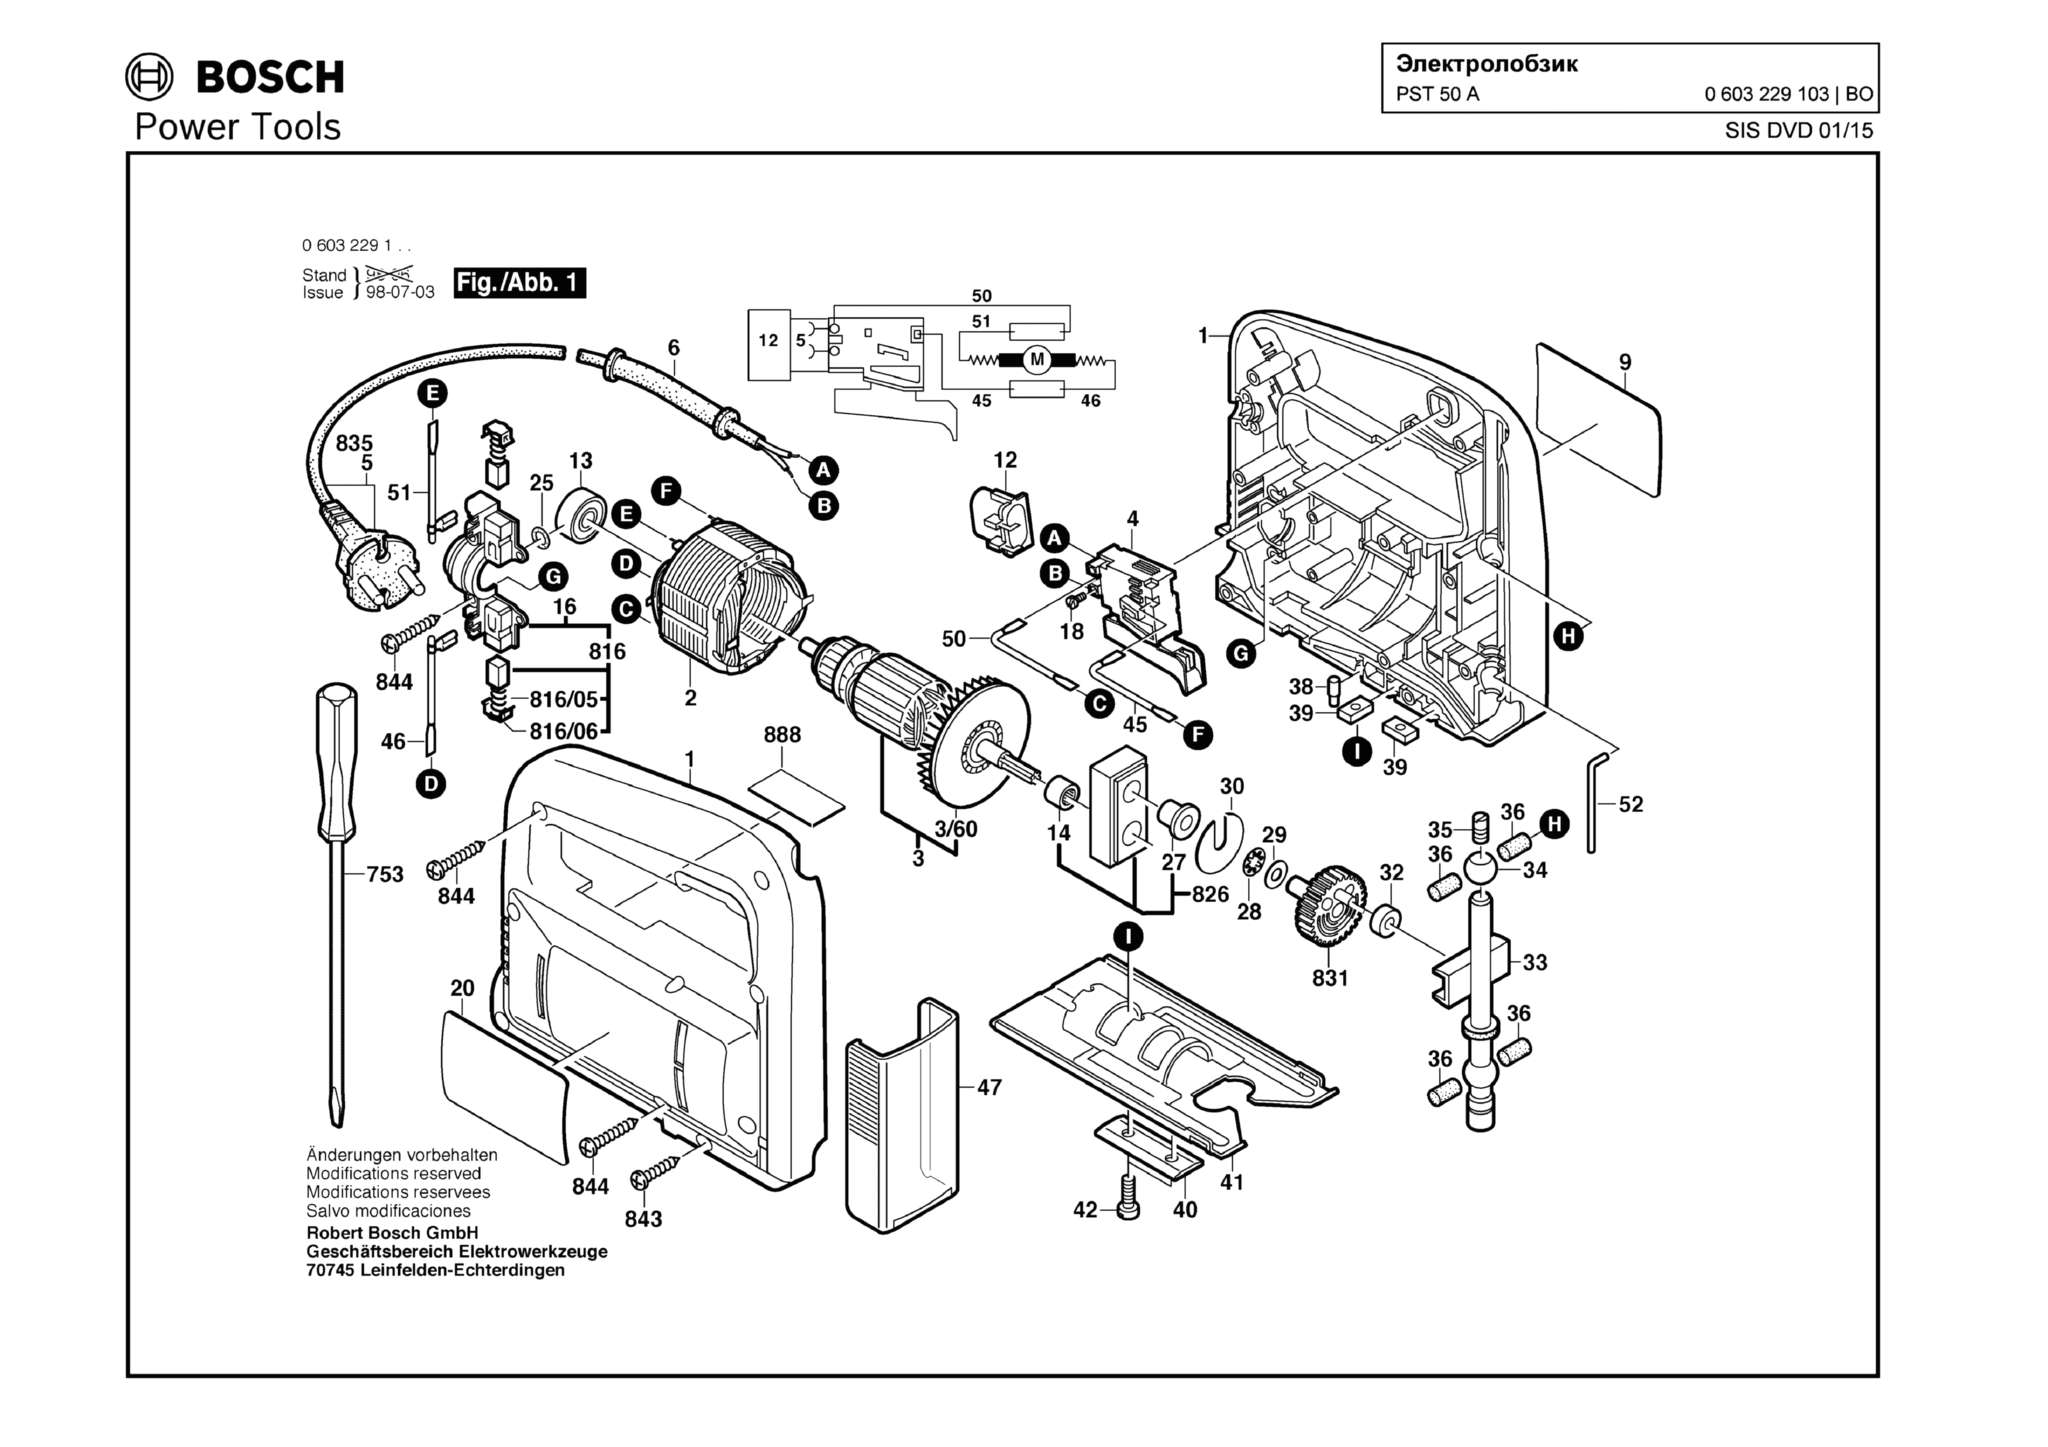 Запчасти, схема и деталировка Bosch PST 50 A (ТИП 0603229103)